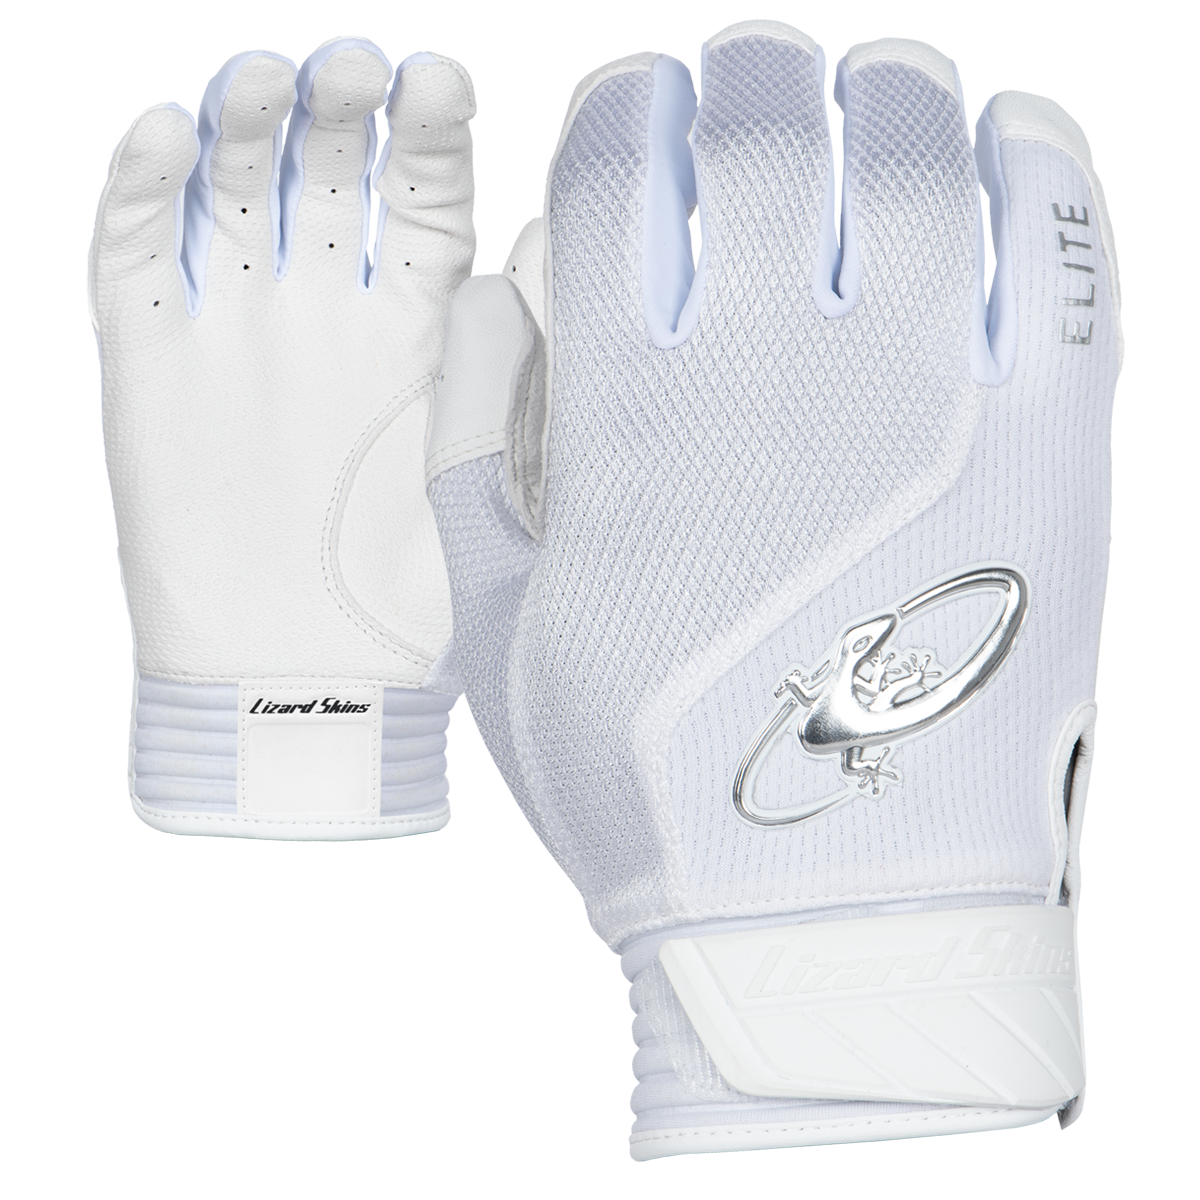 Lizard Skins Komodo Elite V2 Batting Glove - Diamond White